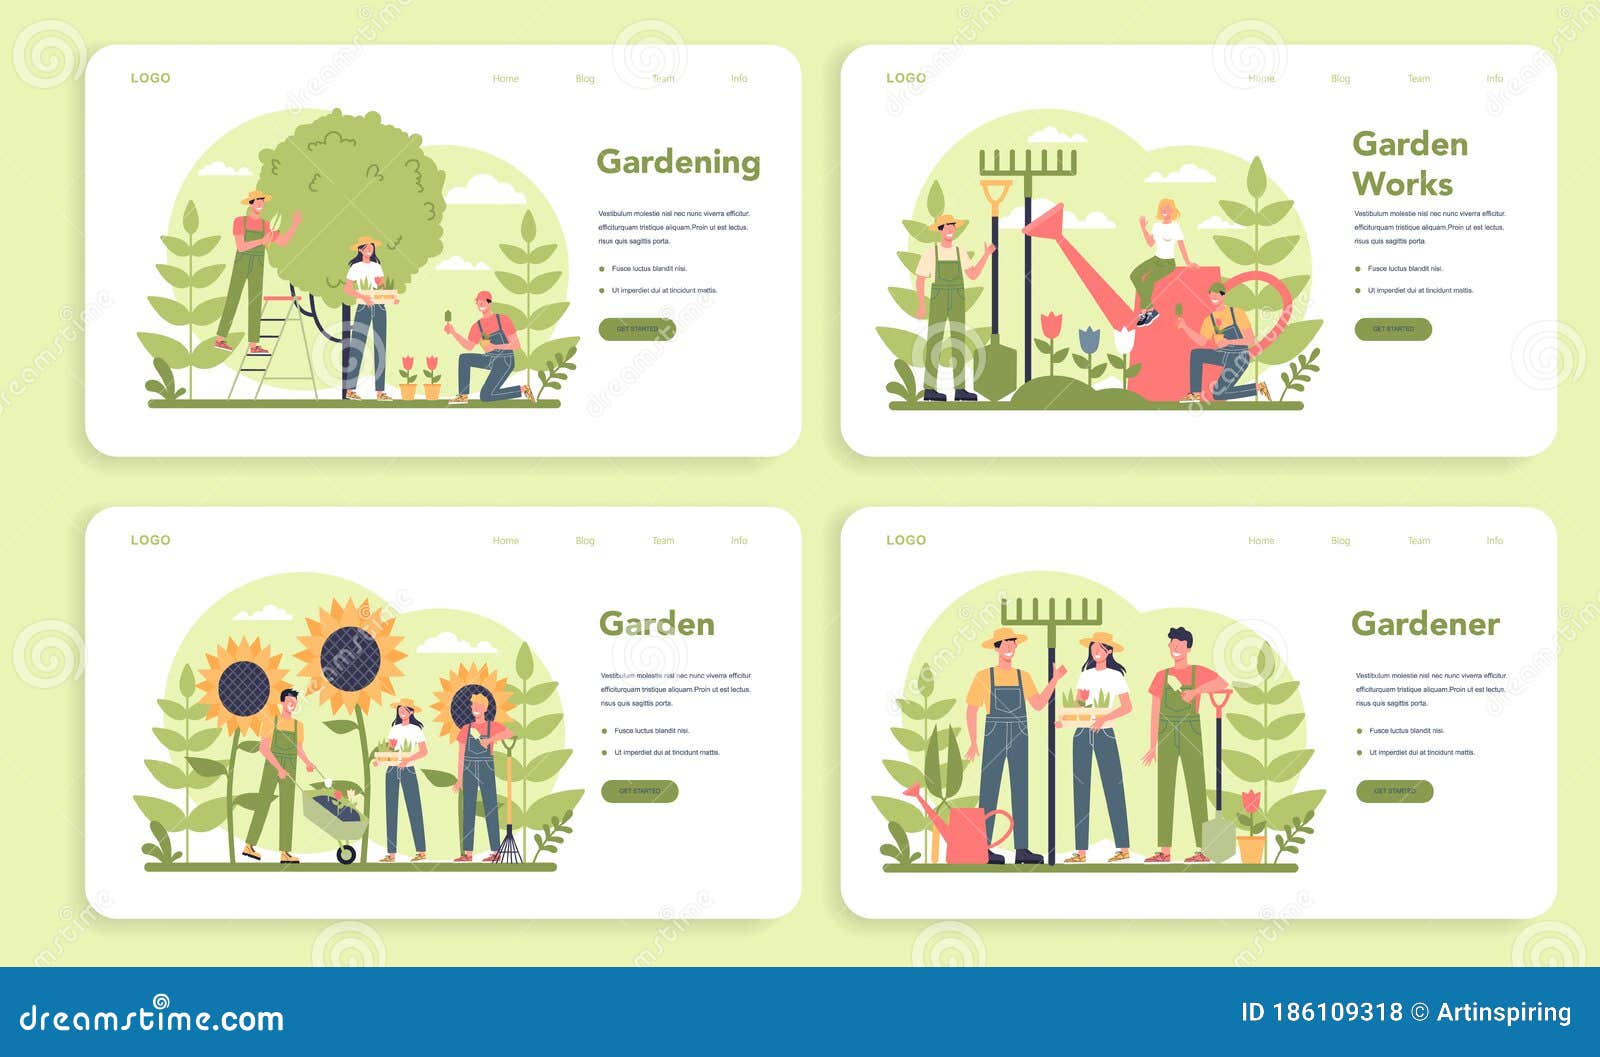 gardening web banner or landing page set. idea of horticultural